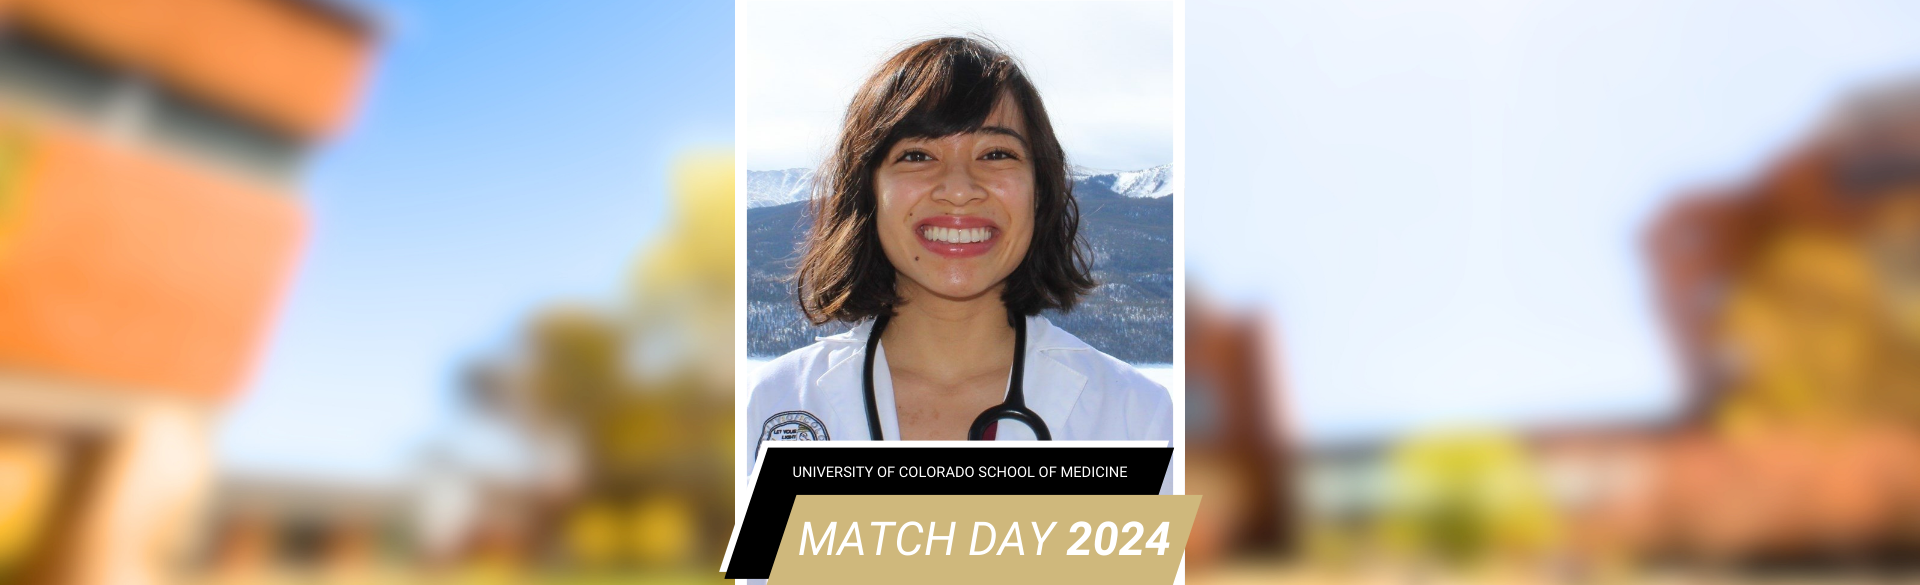 Thy Nguyen | Match Day 2024